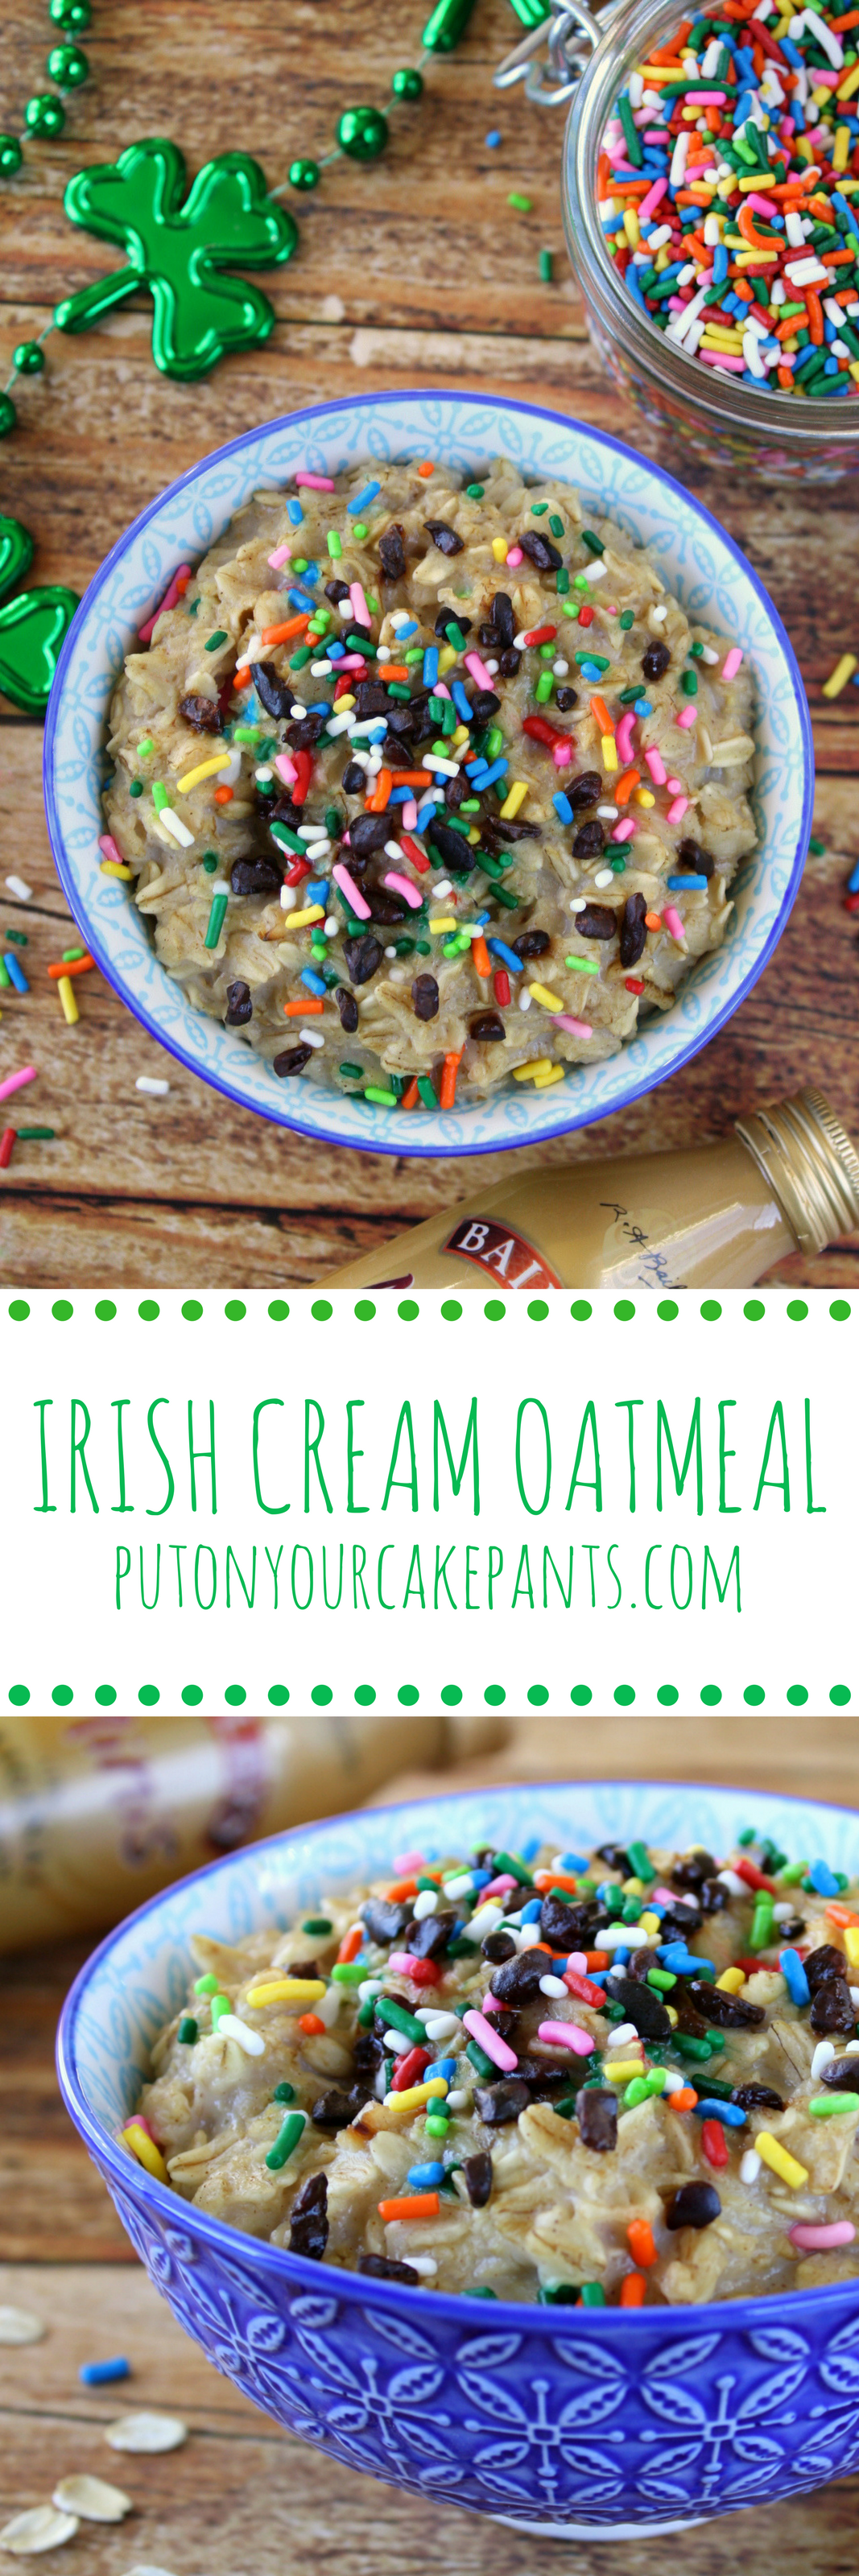 Irish cream oatmeal